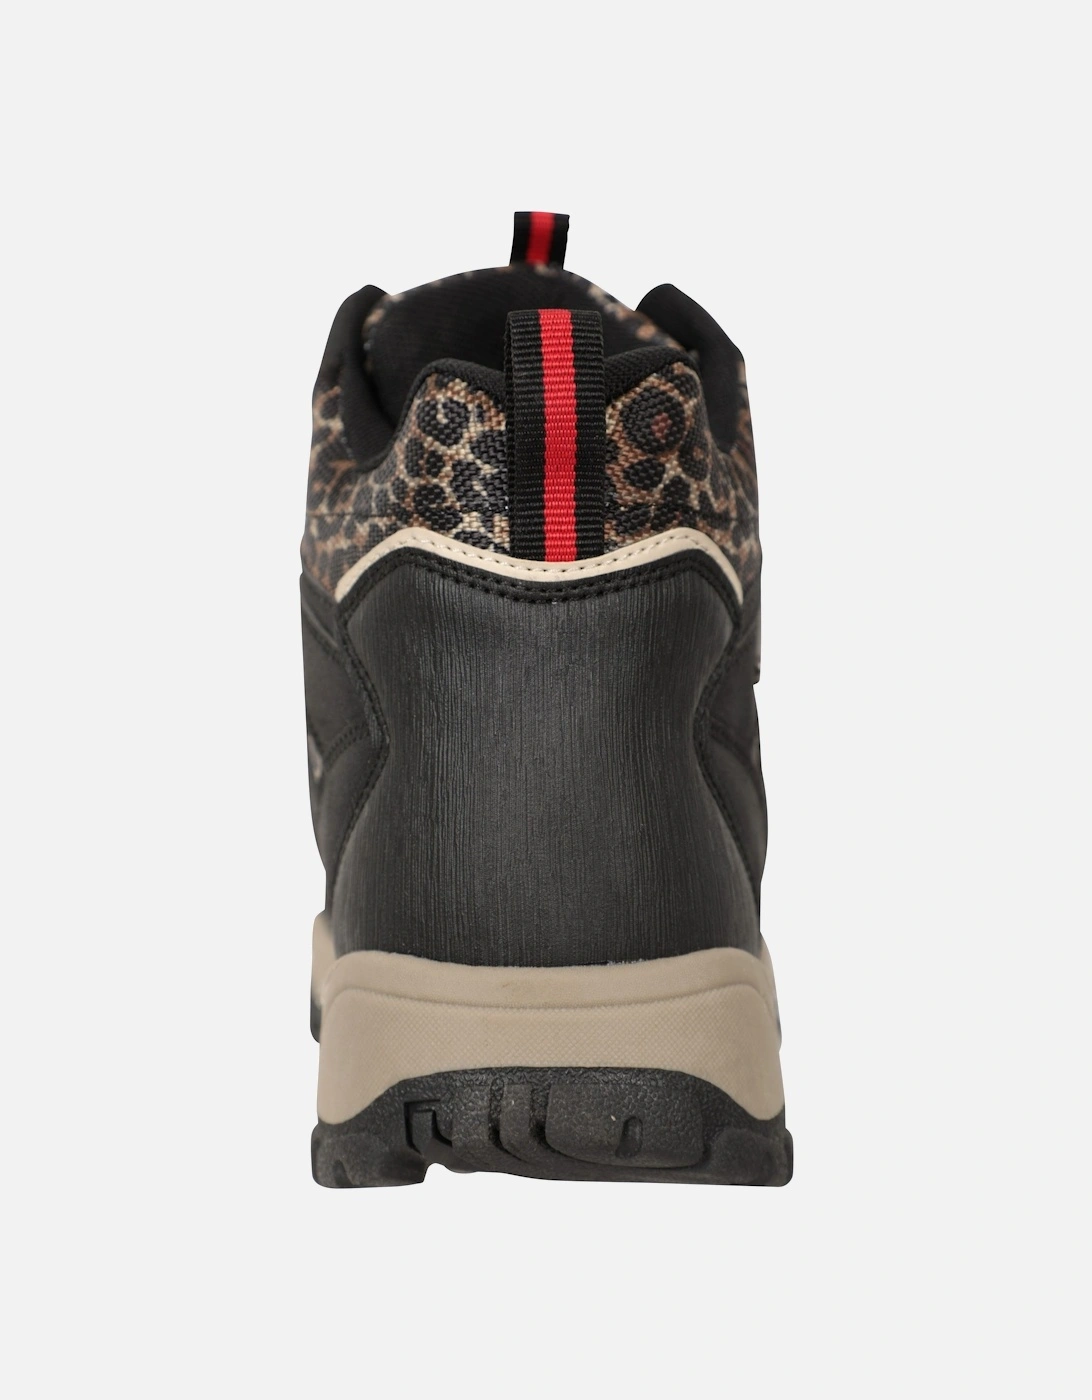 Womens/Ladies Adventurer Leopard Print Faux Suede Waterproof Walking Boots